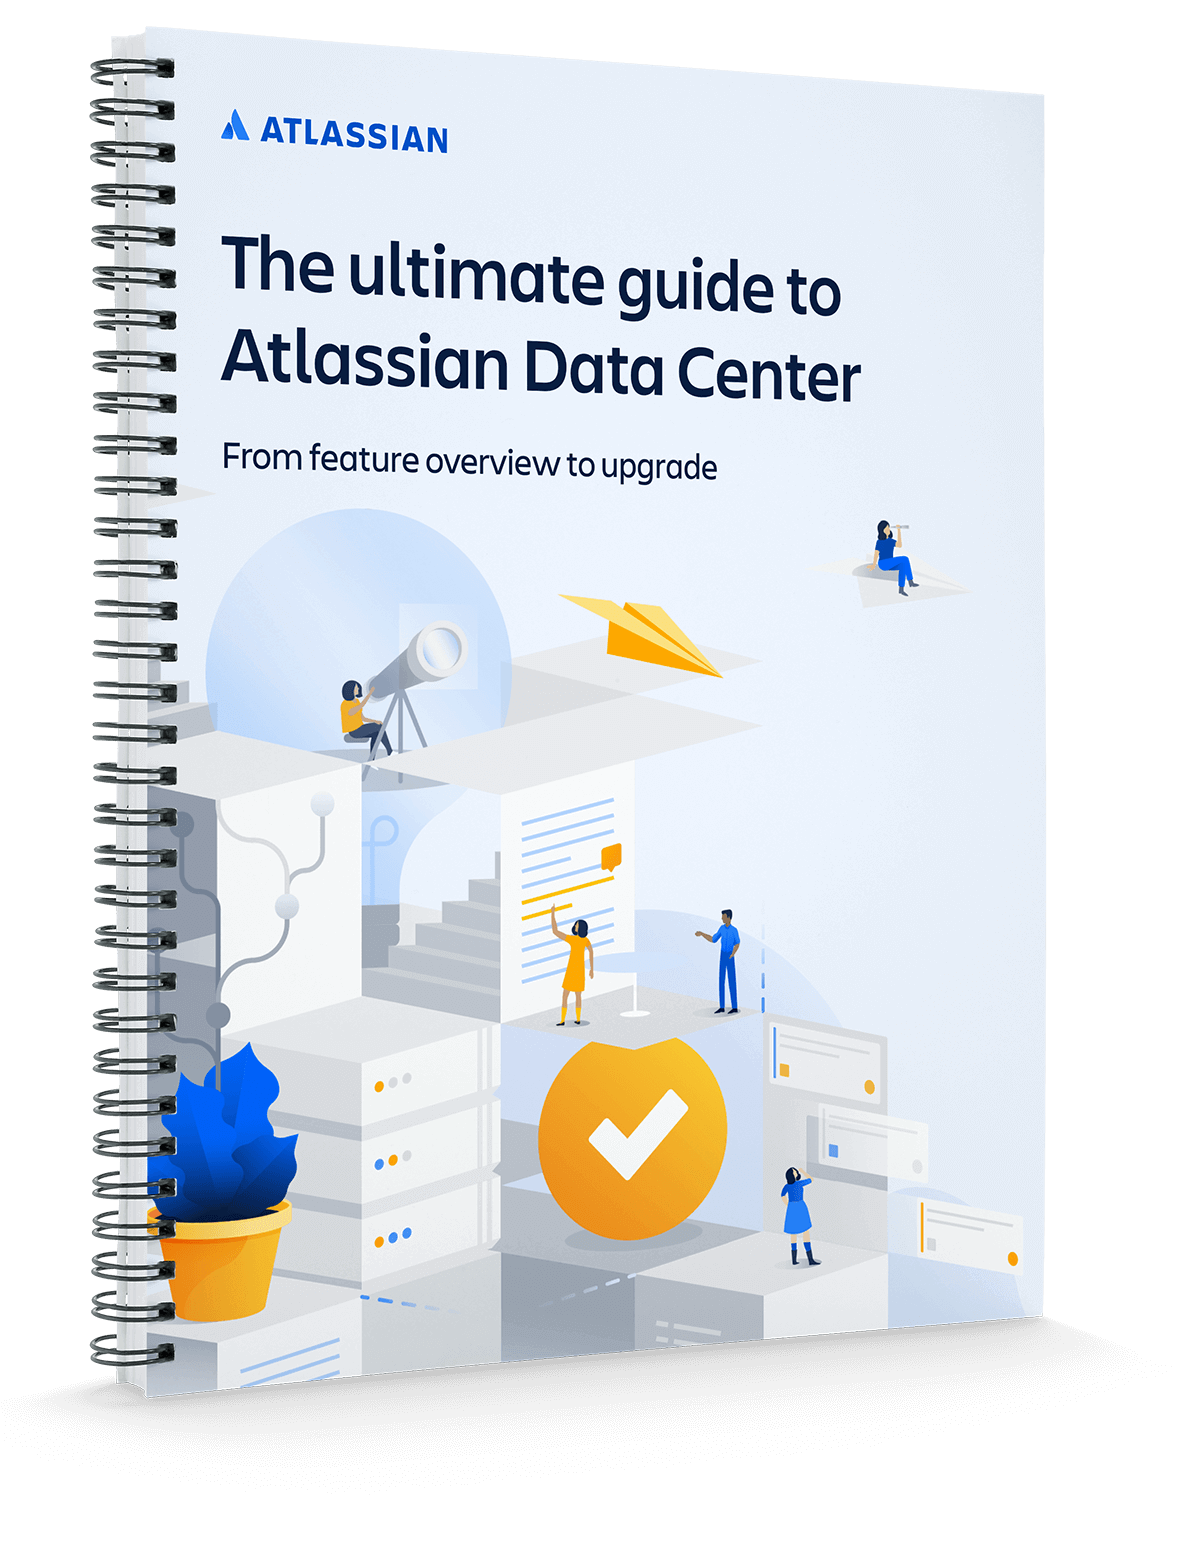 Portada del pdf de la guía definitiva de Atlassian Data Center